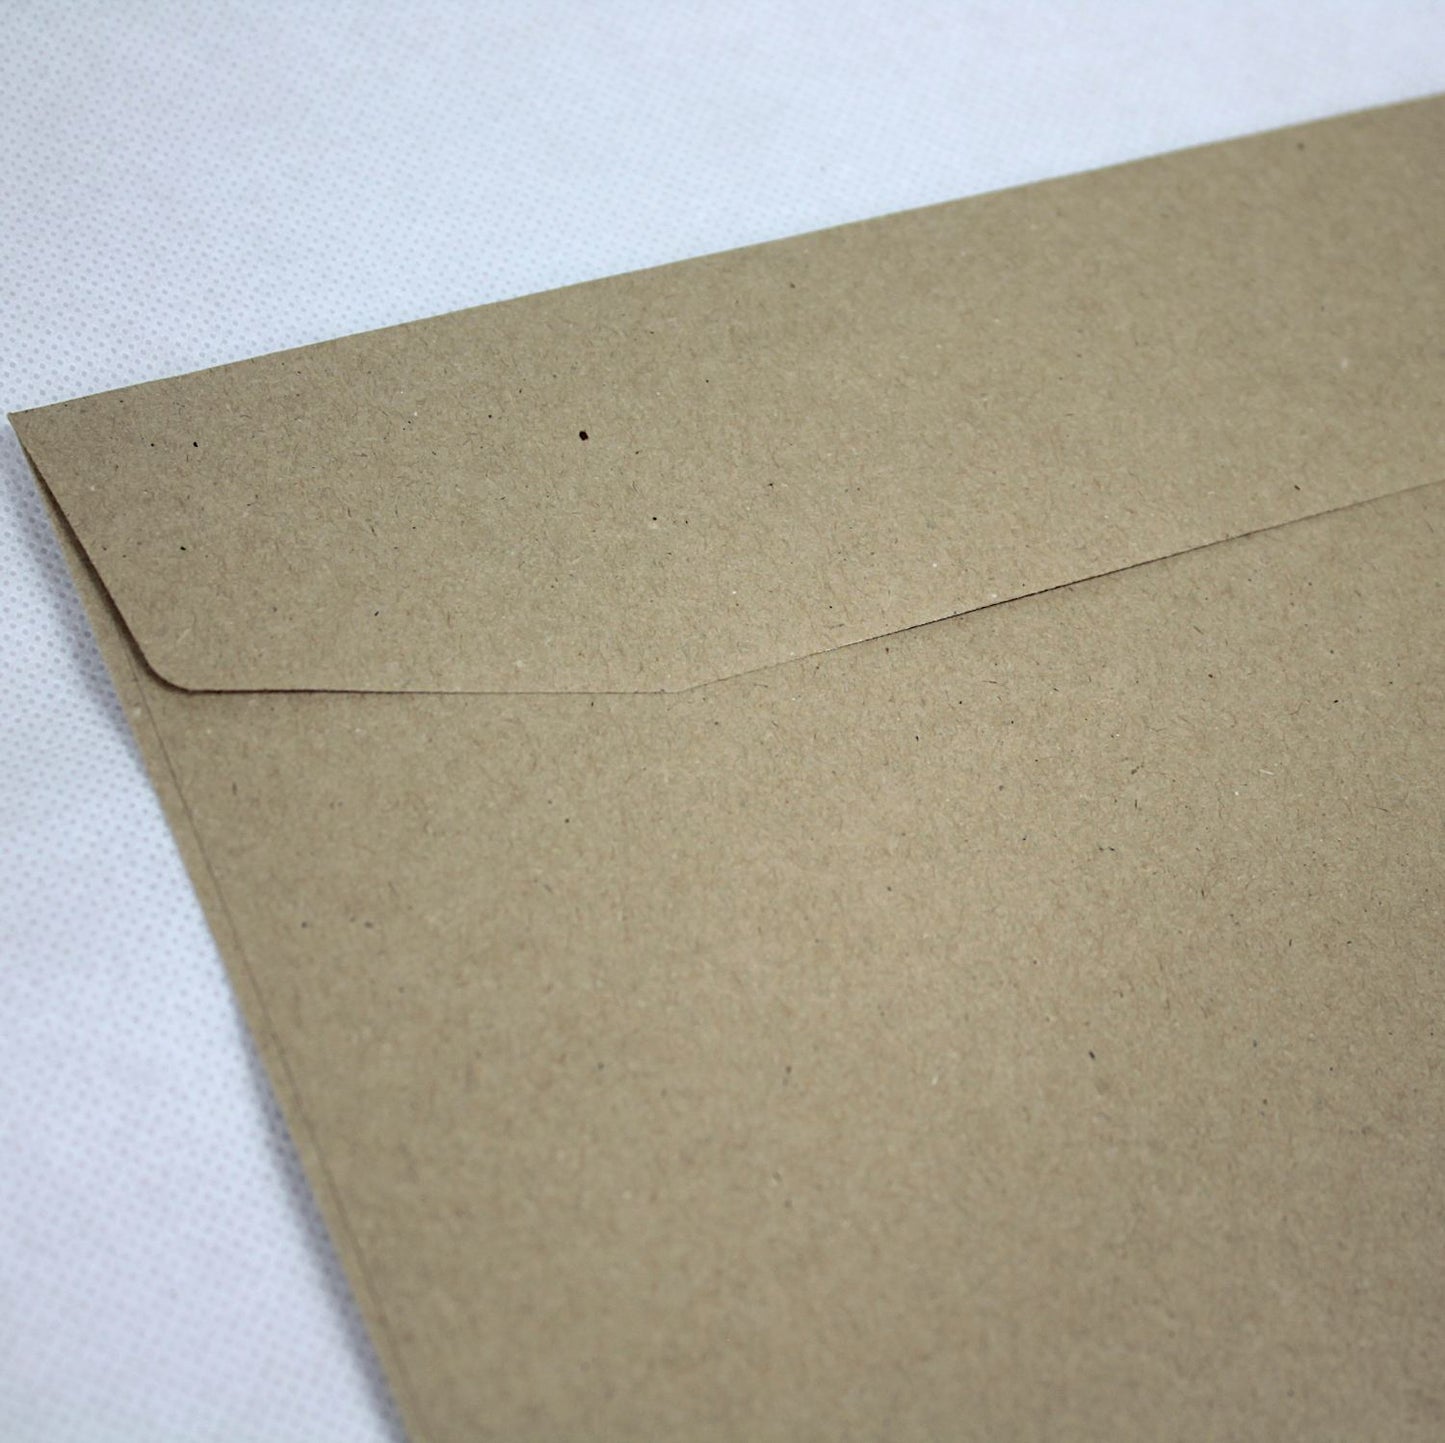 155x220mm C5- Manilla Gummed Envelopes (None Window)